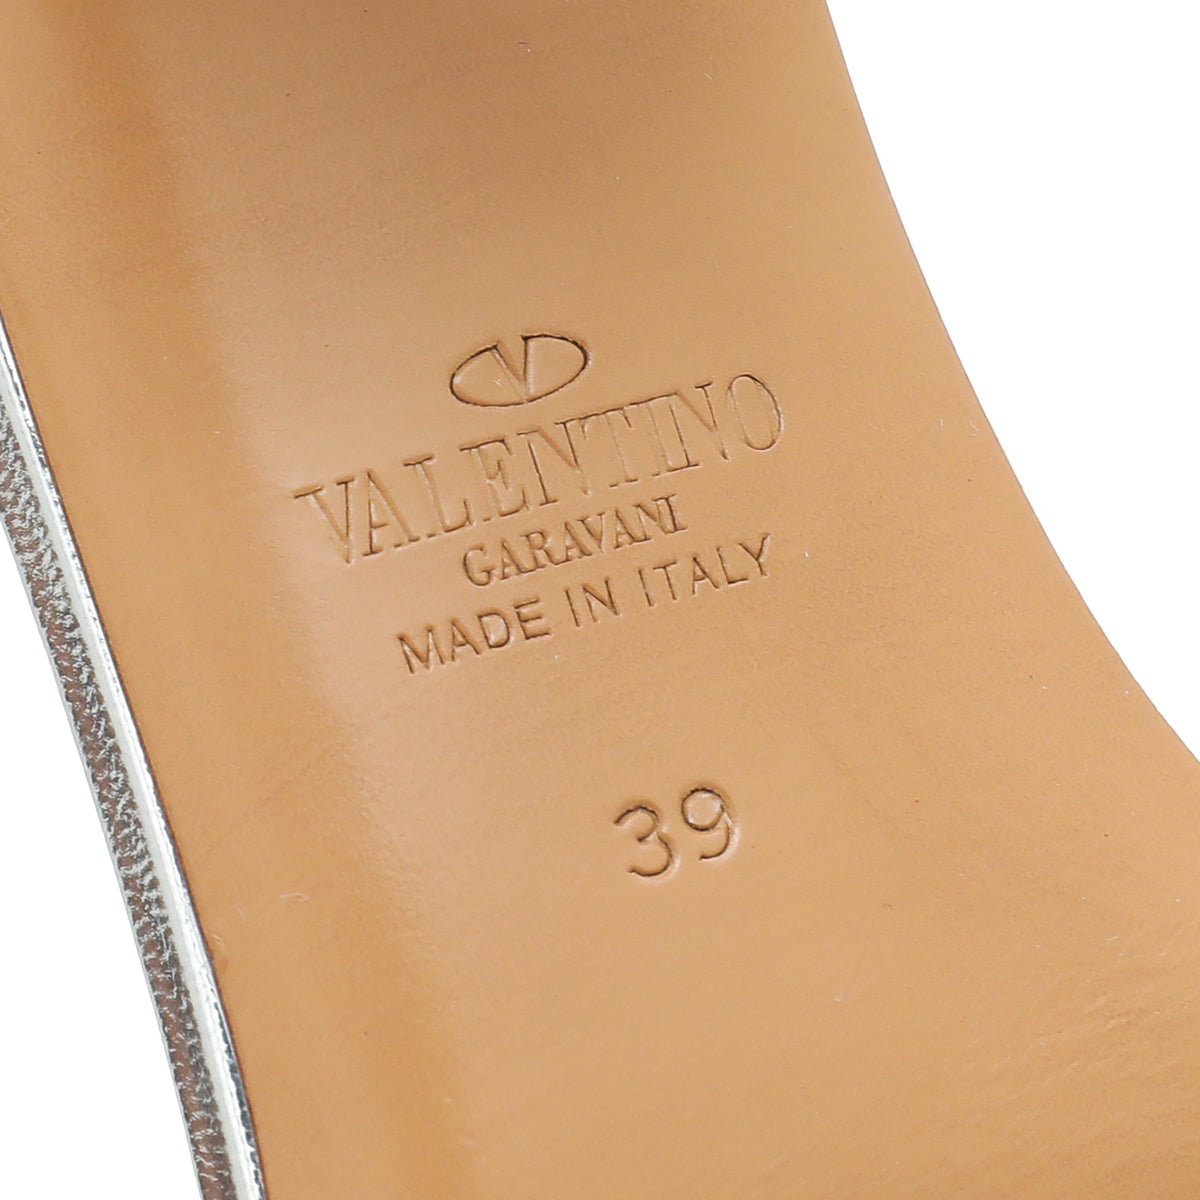 Valentino Metallic Silver Rockstud Slide Sandals 39